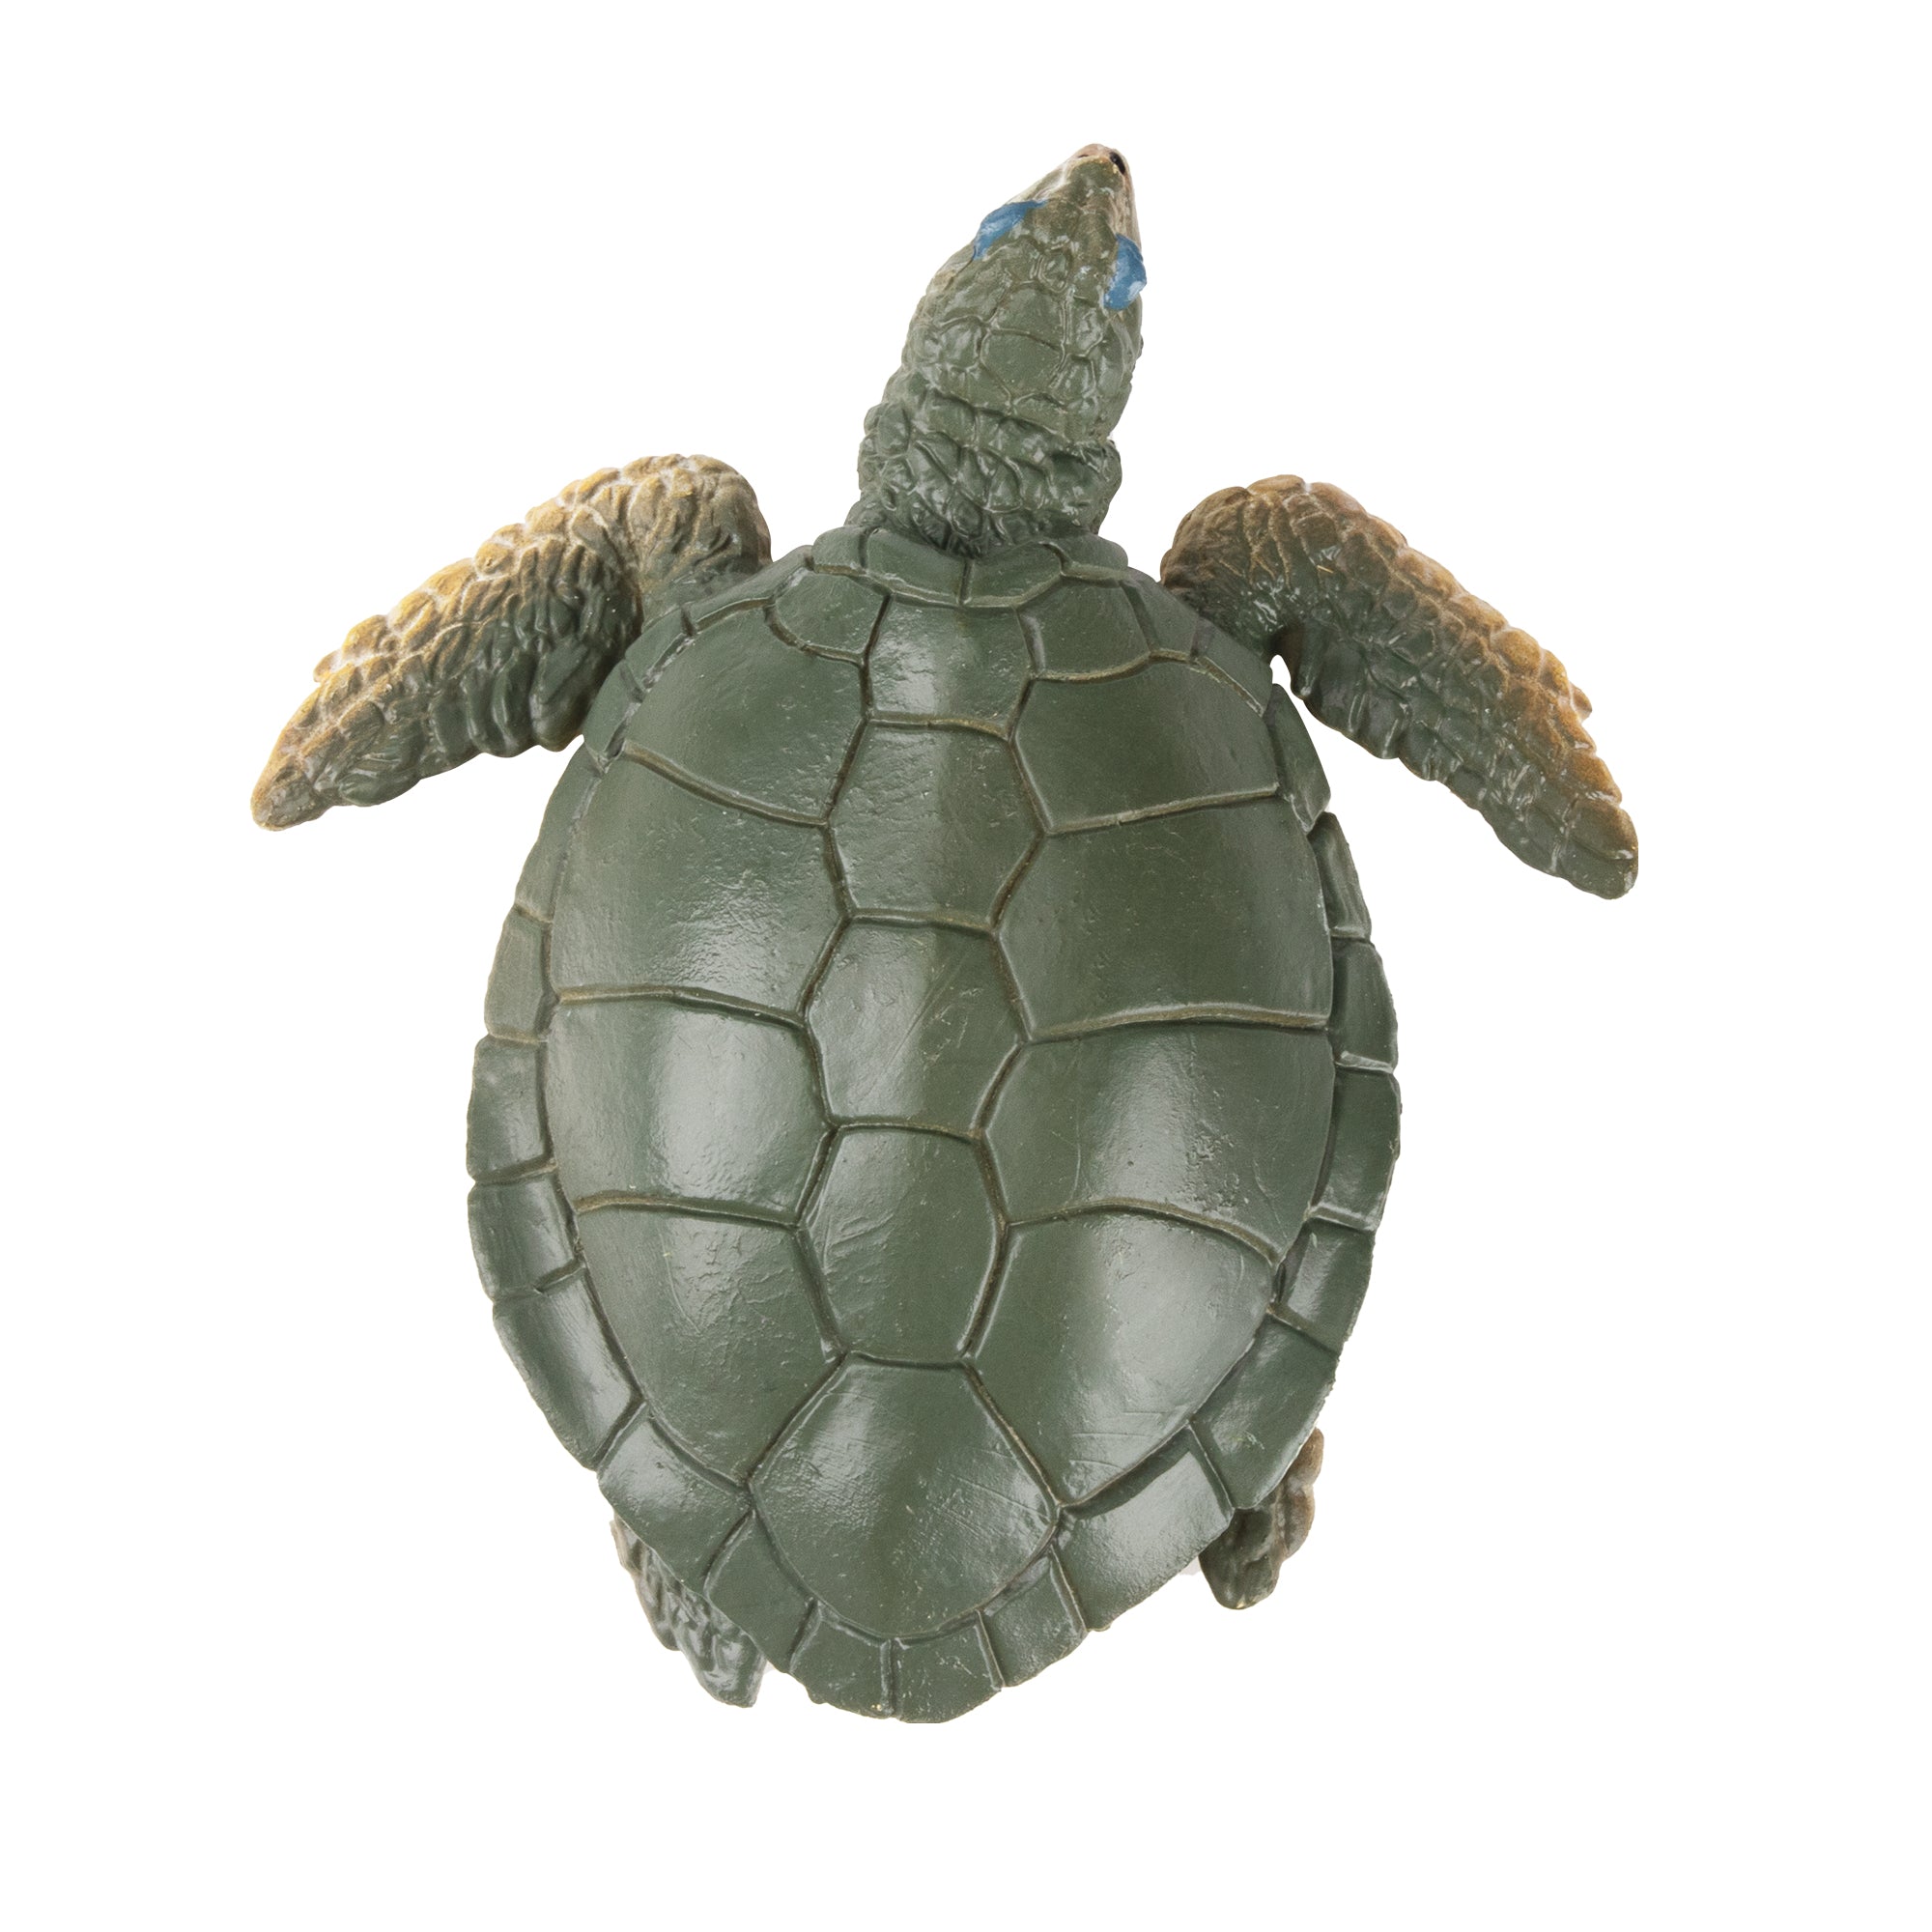 Toymany Walking Kemp's Ridley Sea Turtle Figurine Toy-top